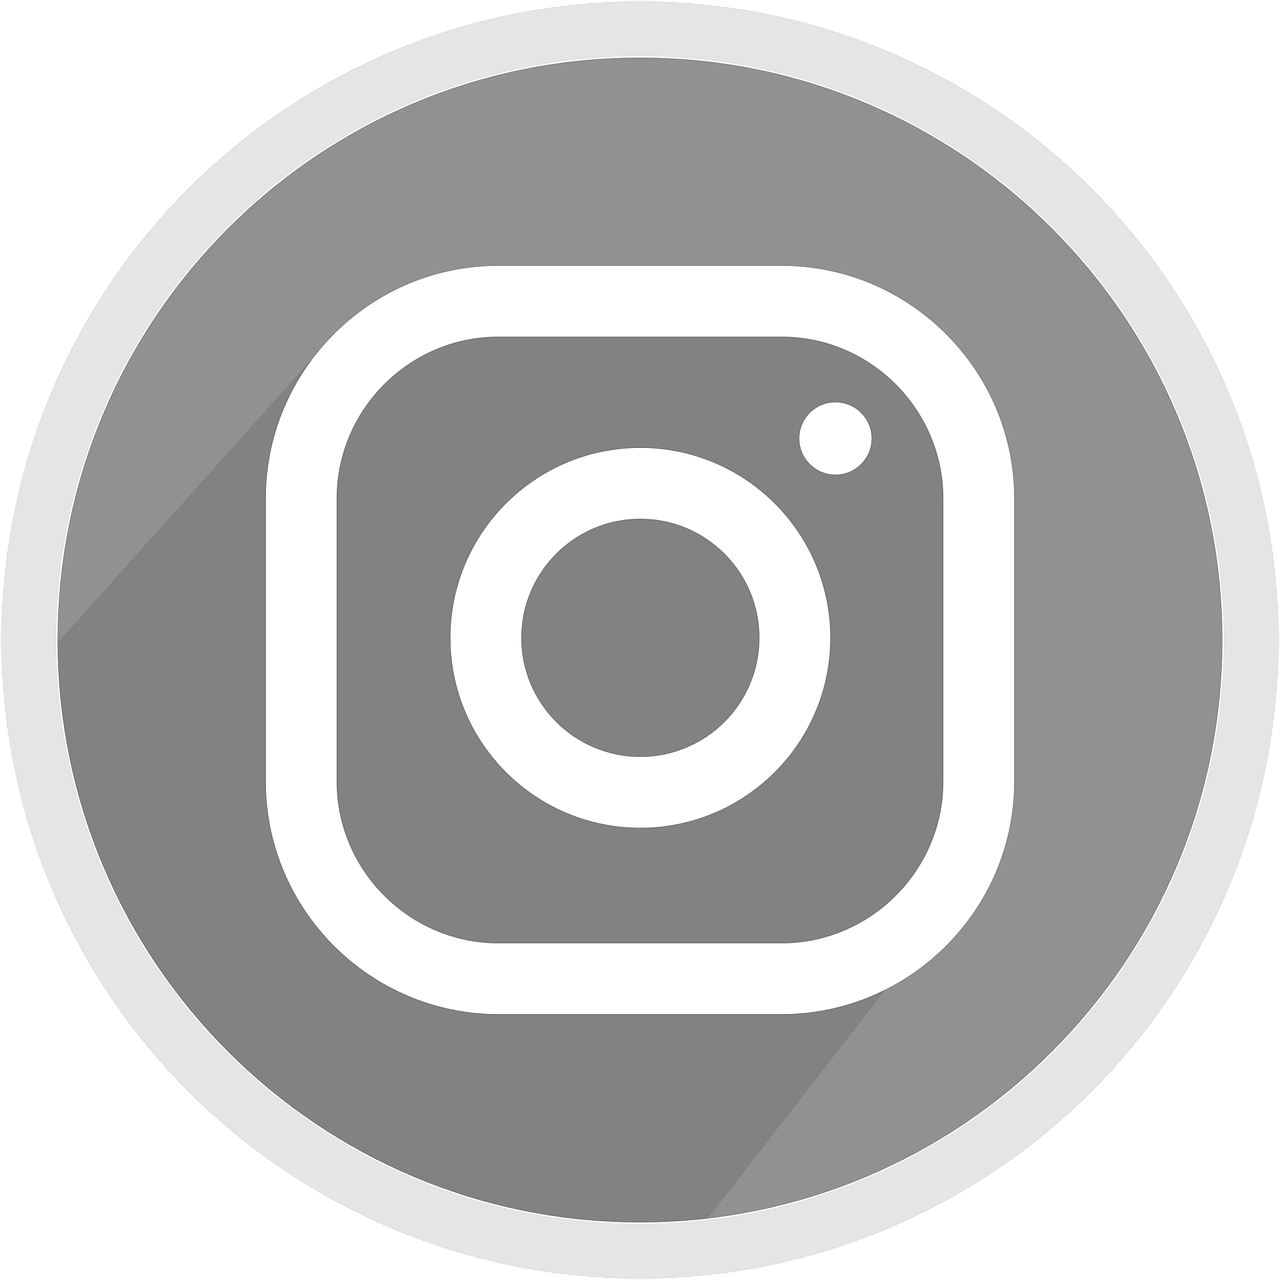 Logo instagram,icon,grey,social media,free vector - free image from needpix.com